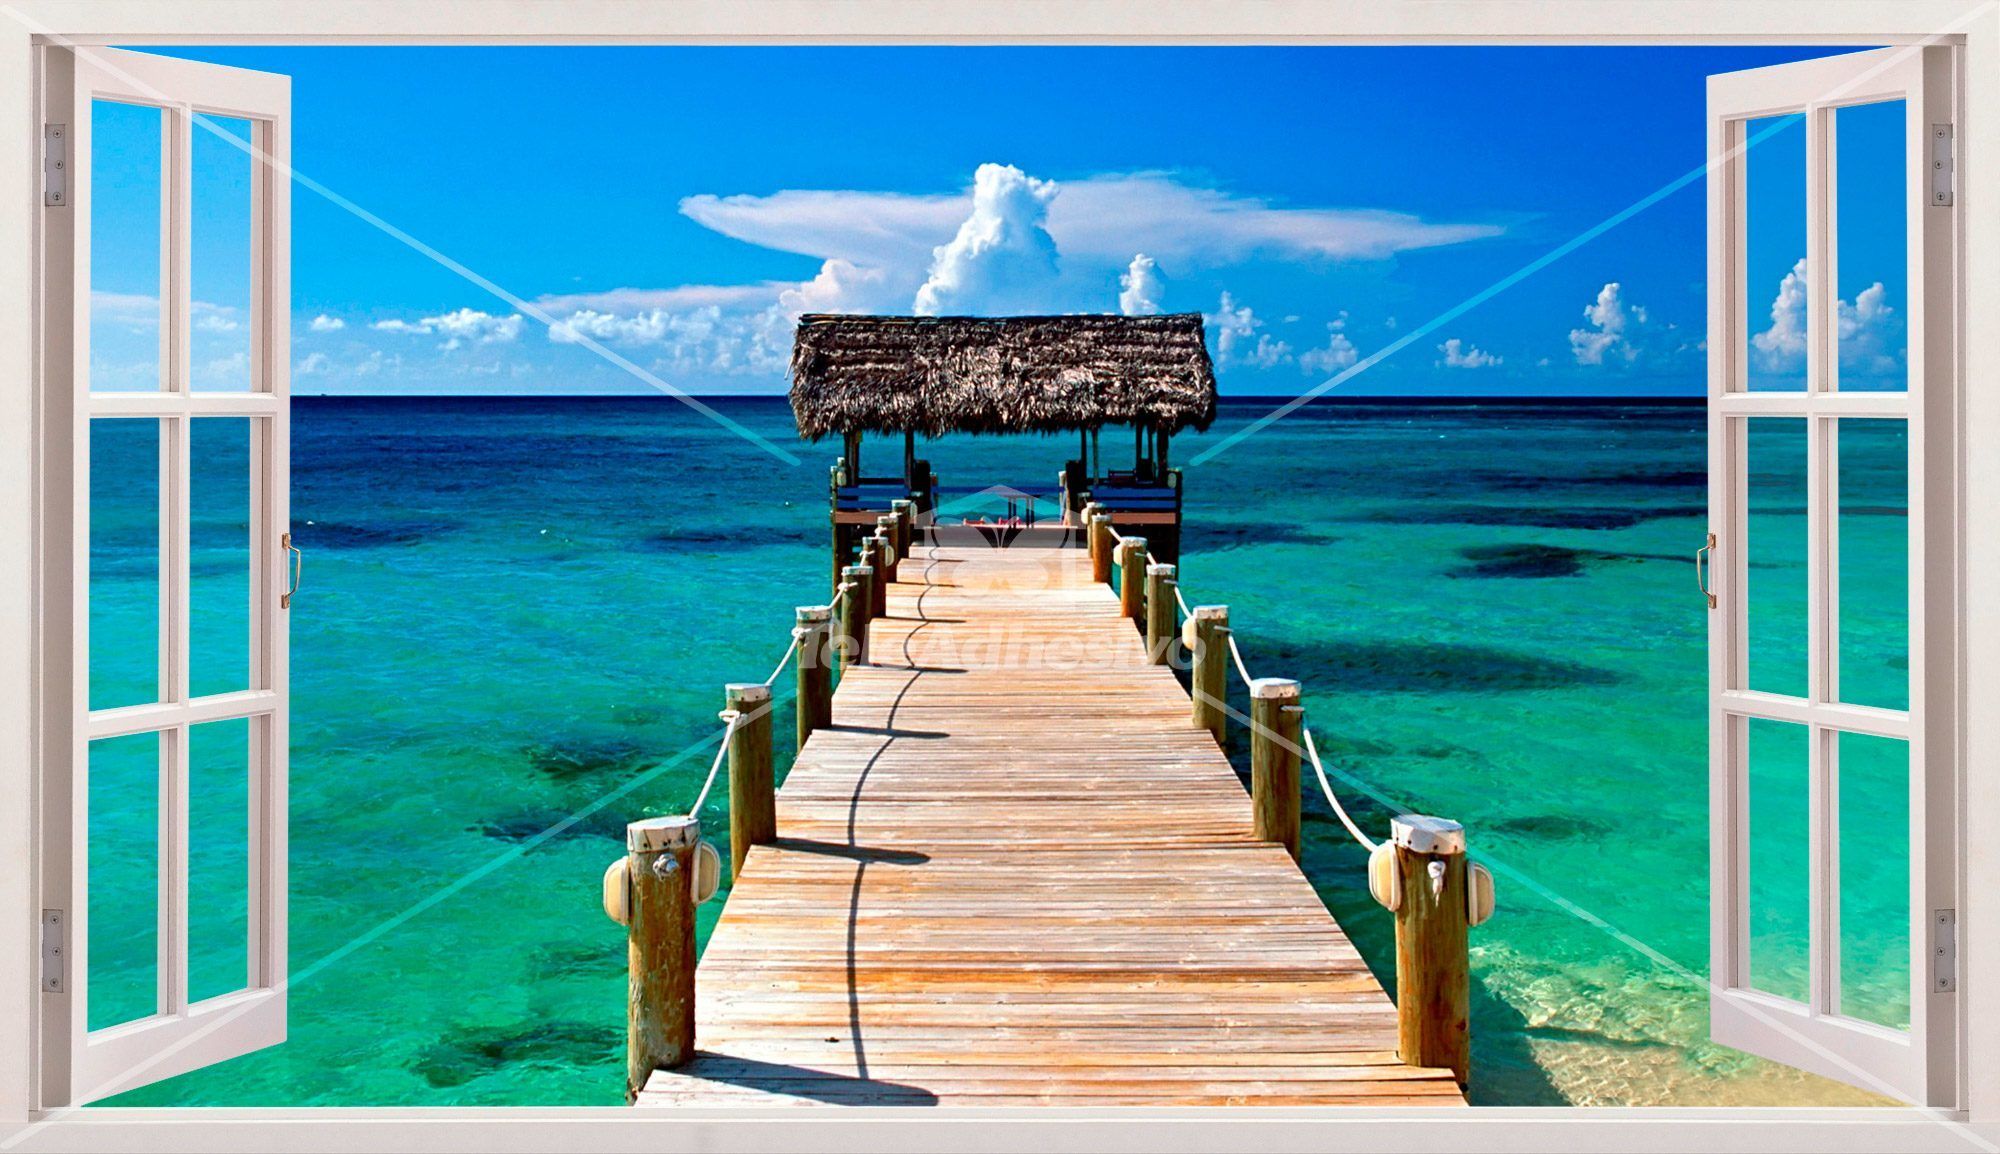 Stickers muraux: Panorama passerelle vers la mer aux Bahamas